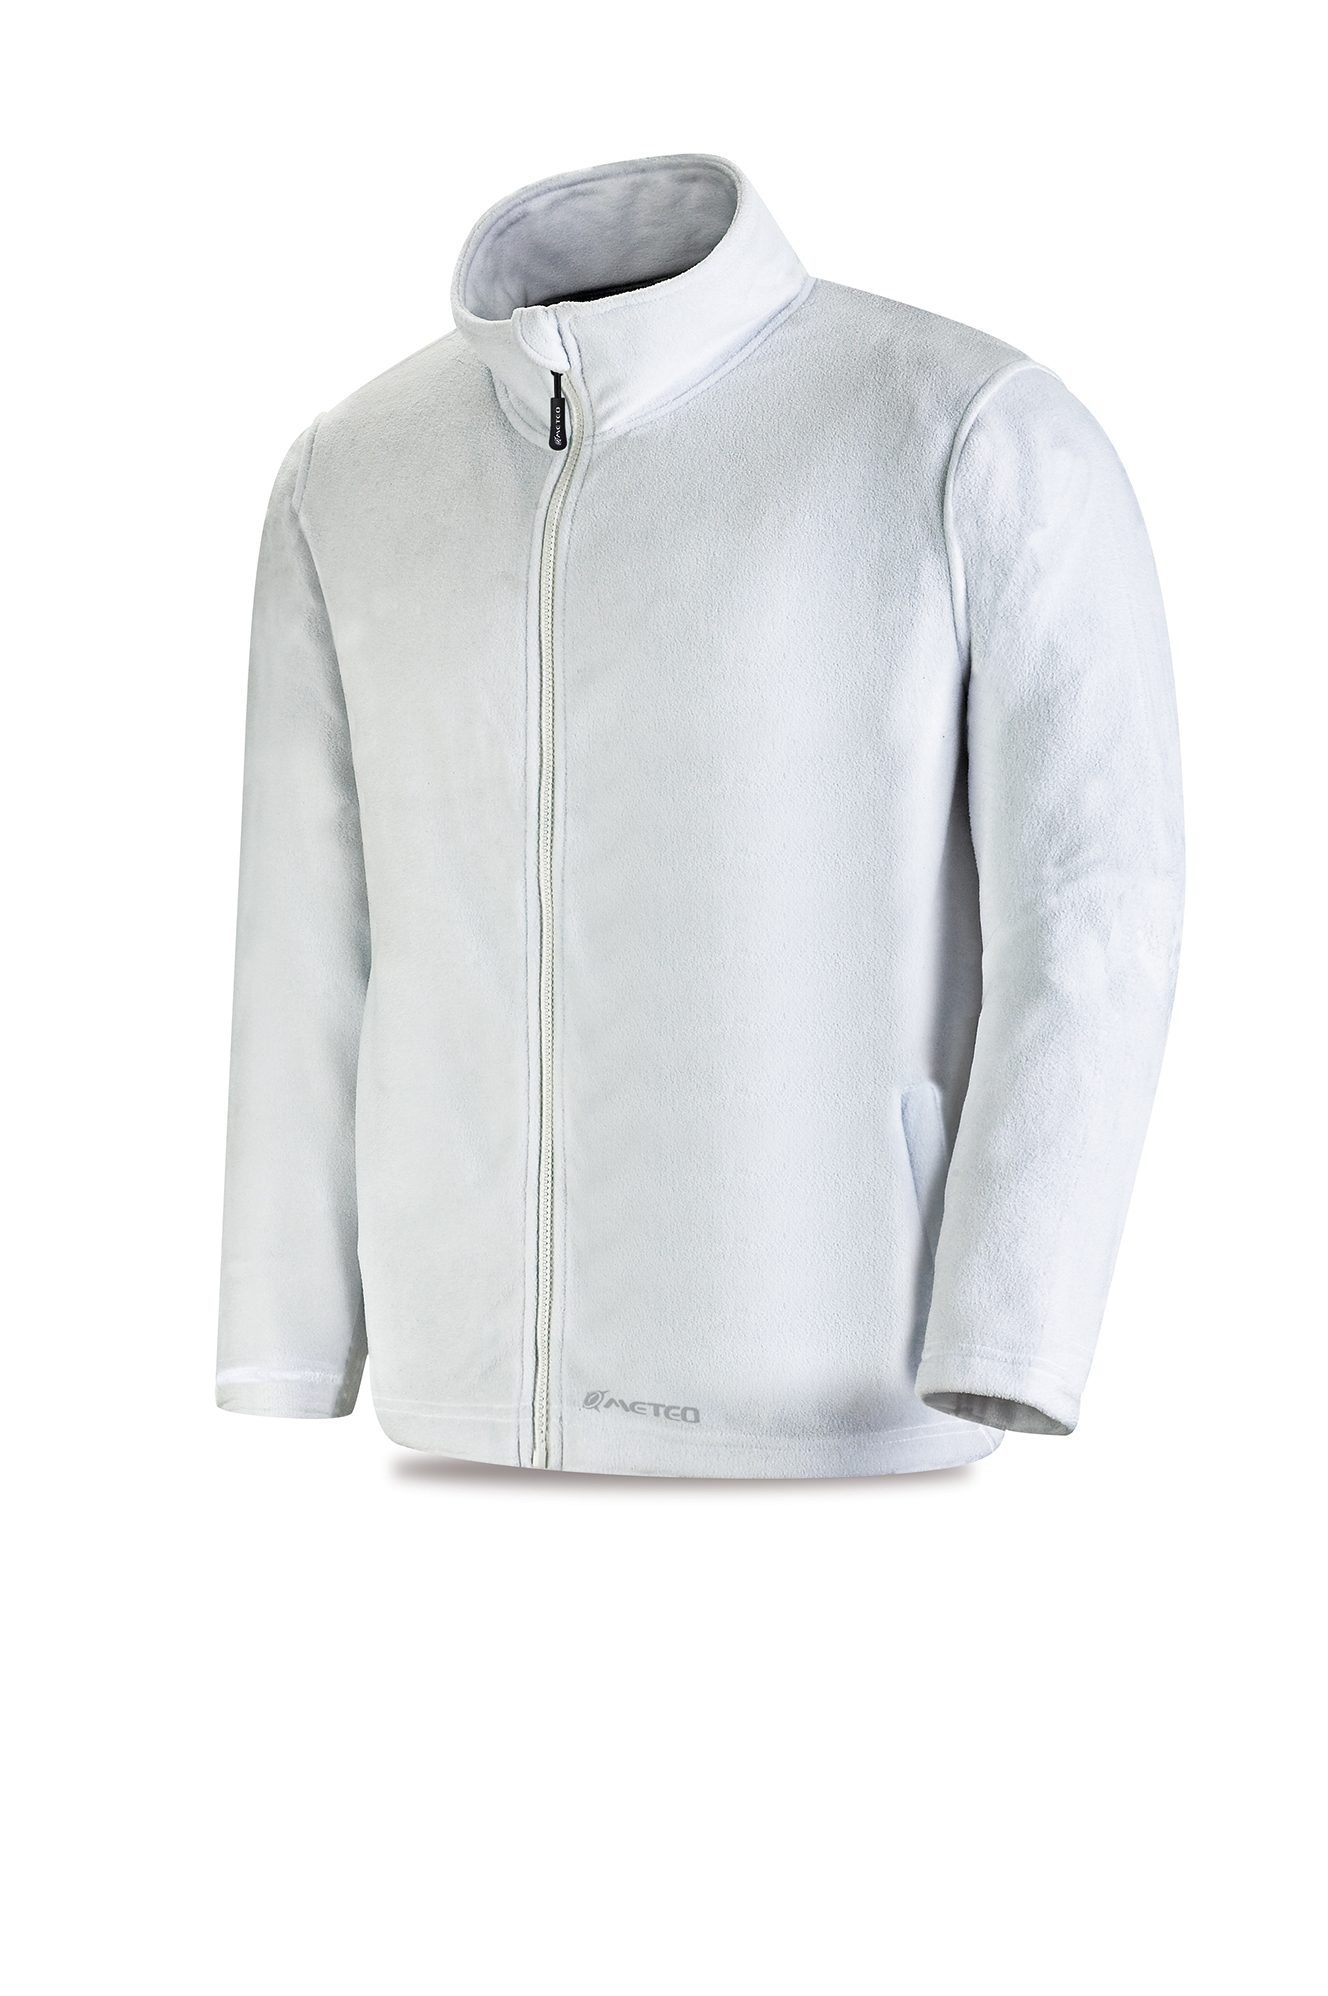 288-CHPB Coats and Rain Gear Solar Jackets QUETZAL model fleece jacket. White color.